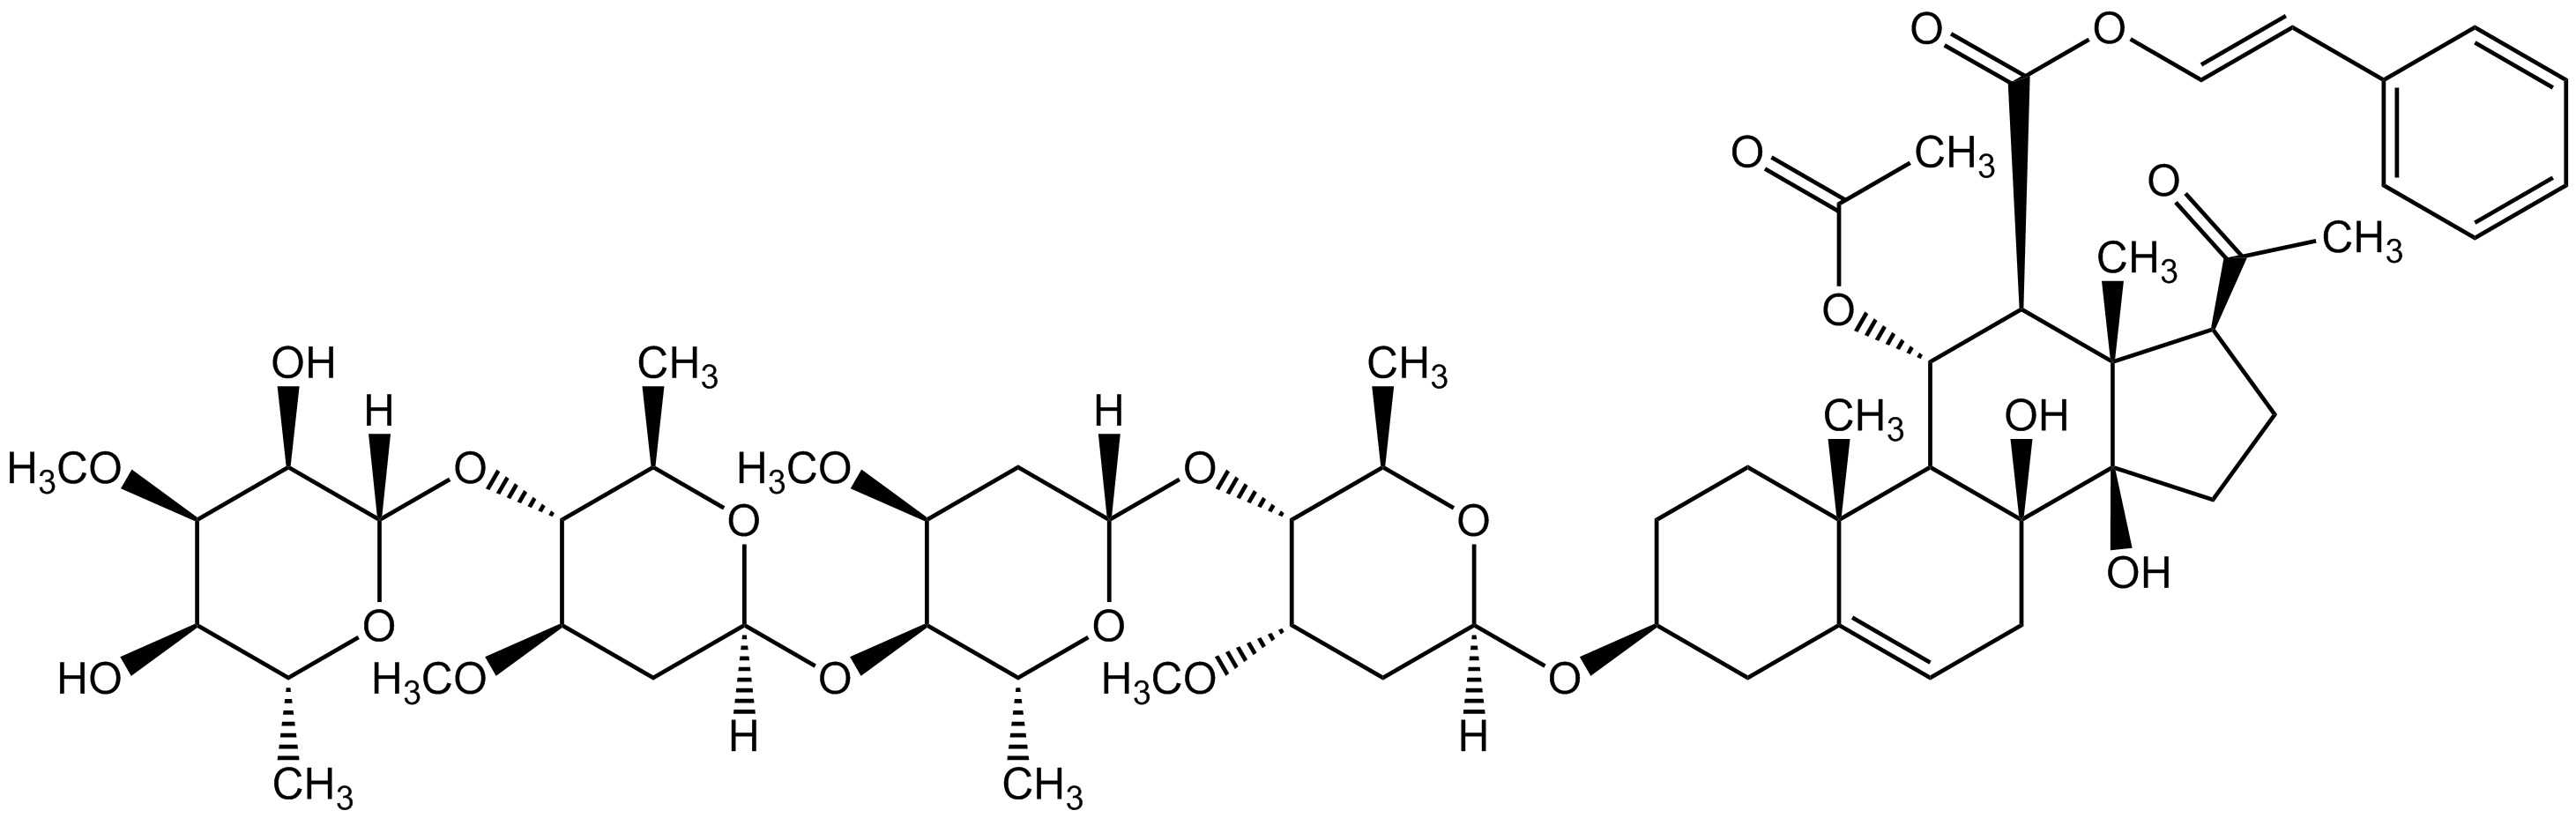 Condurango glycoside E2 phyproof® Reference Substance | PhytoLab